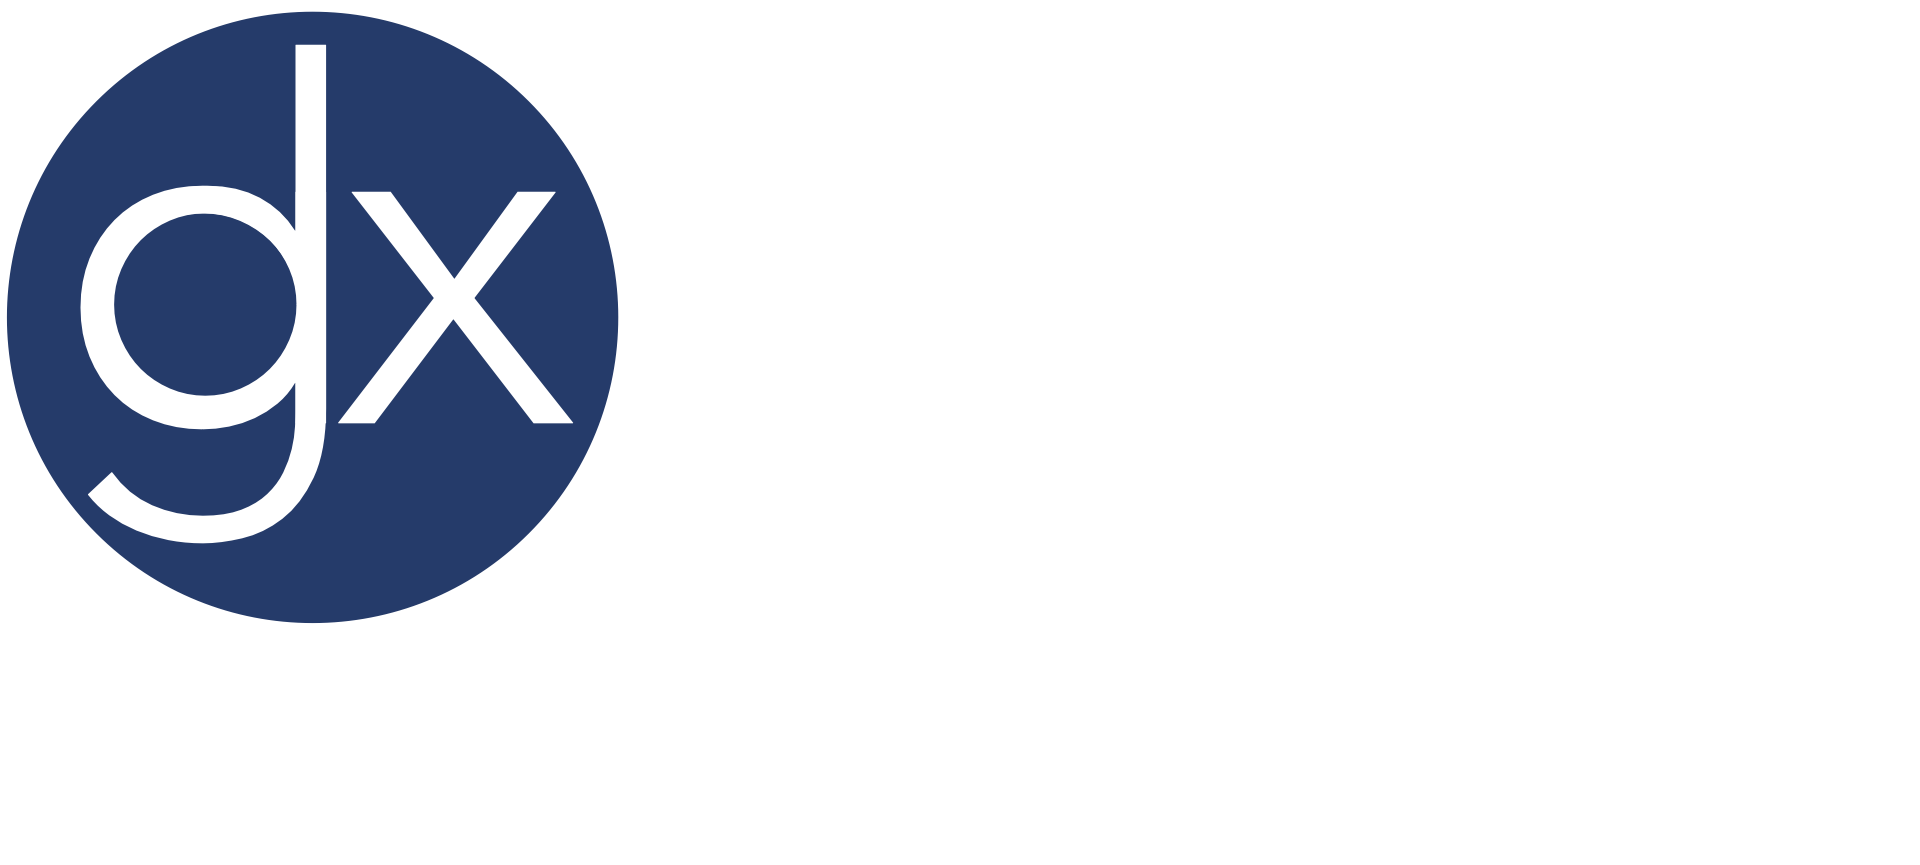 DGX International Travel